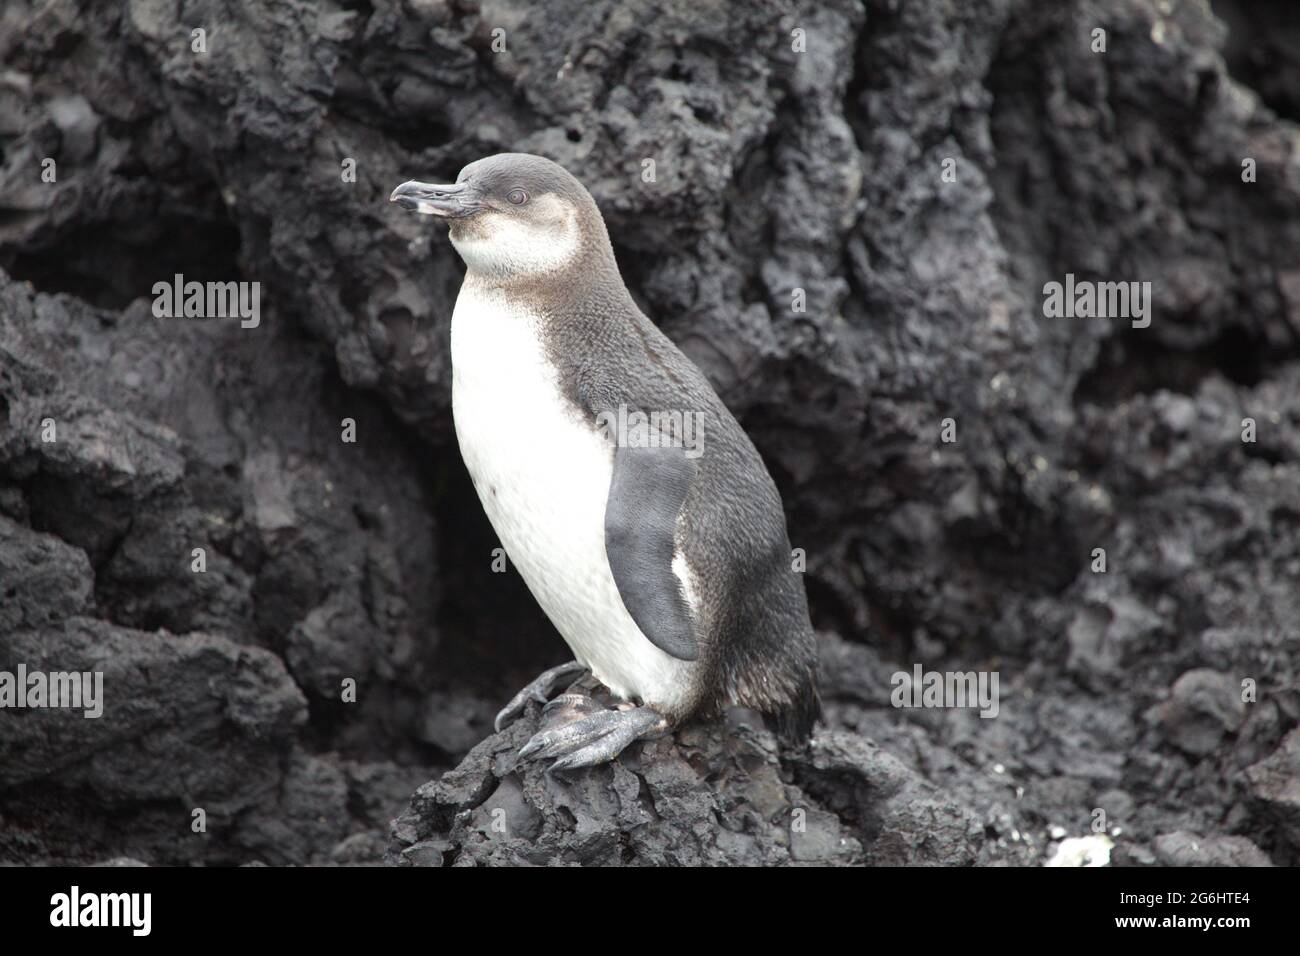 Porträt des Galápagos-Pinguins (Spheniscus mendiculus) auf Lavagesteinen der Galapagos-Inseln, Ecuador. Stockfoto